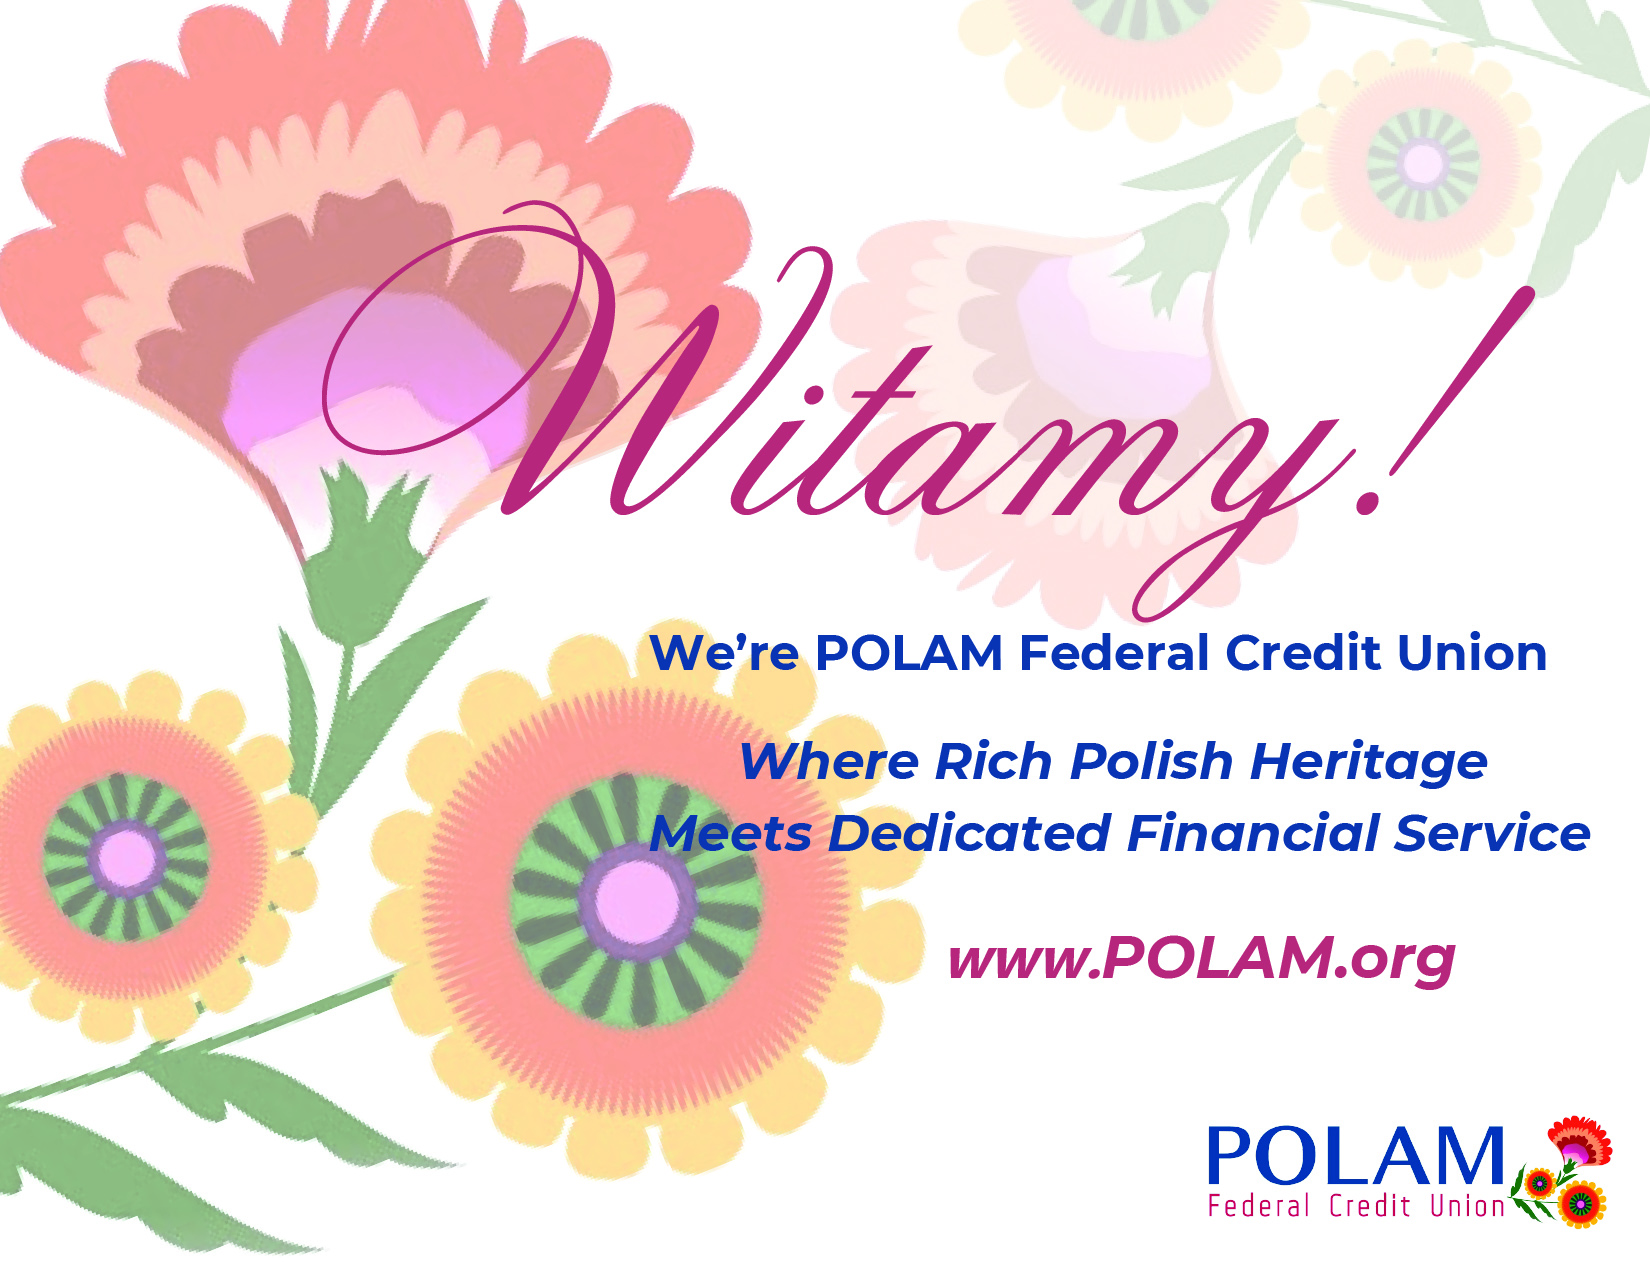 POLAM Federal Credit Union ad